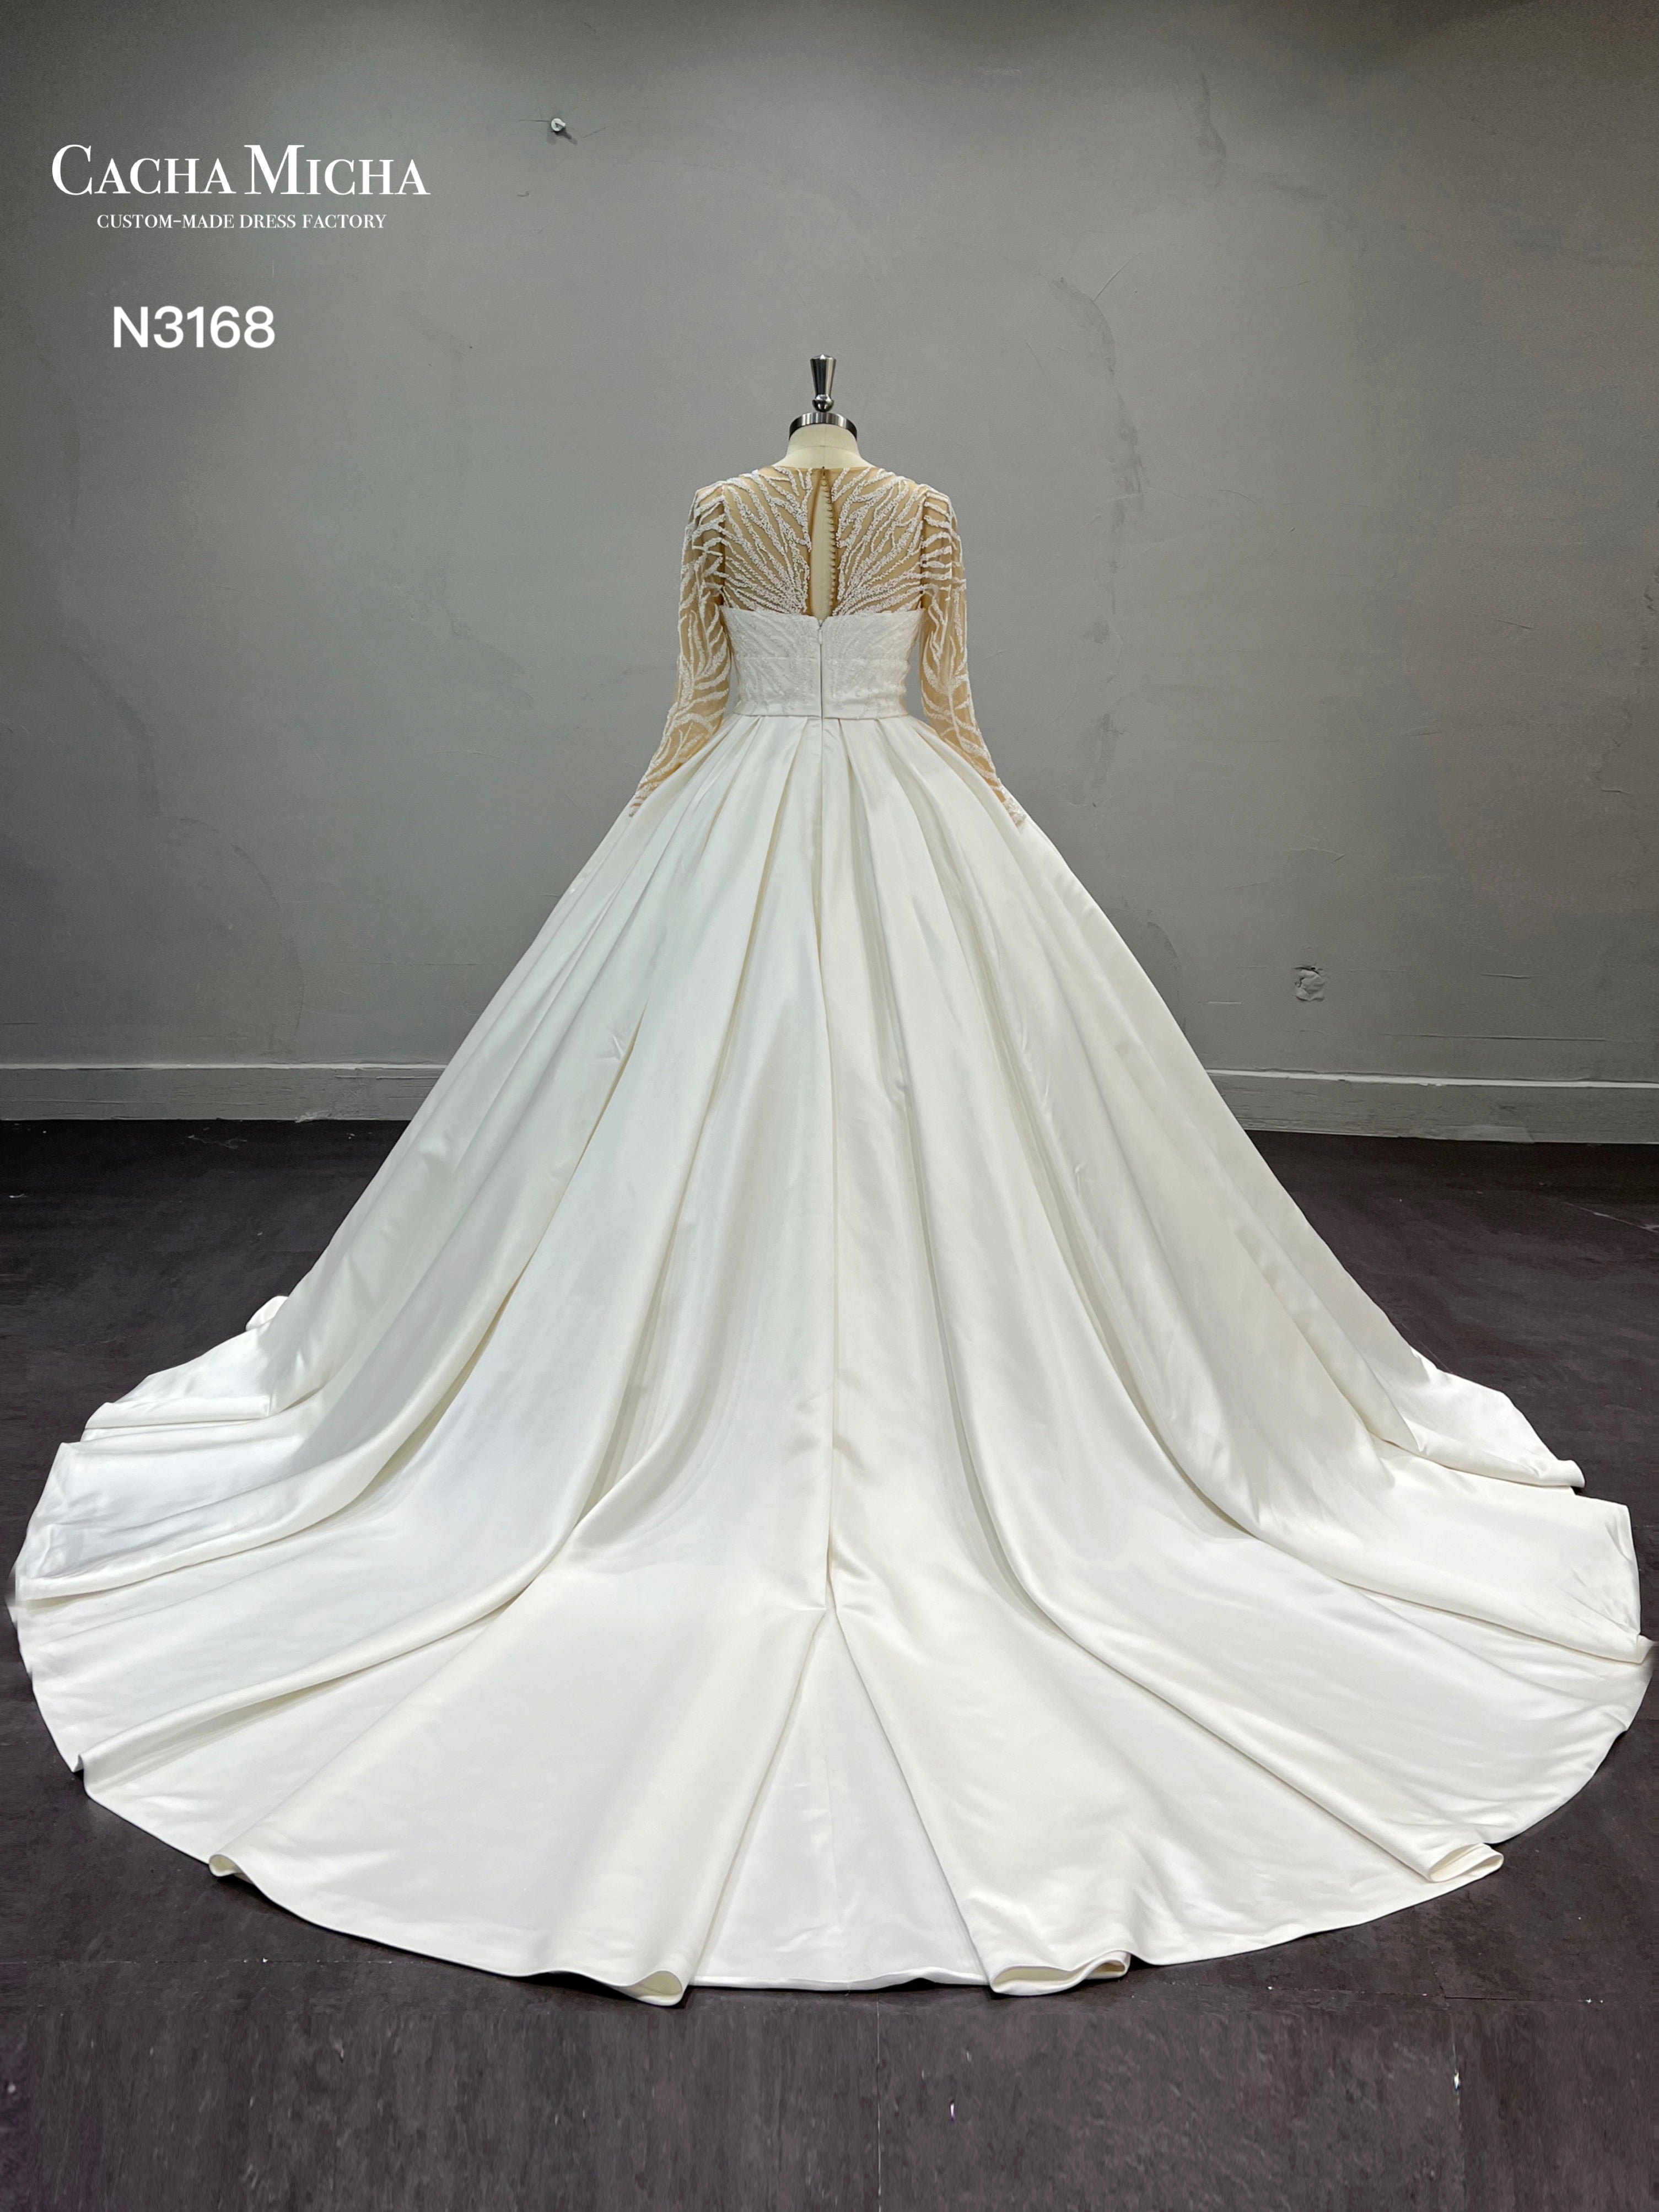 Beaded Long Sleeves Ball Gown Satin Wedding Dress N3168